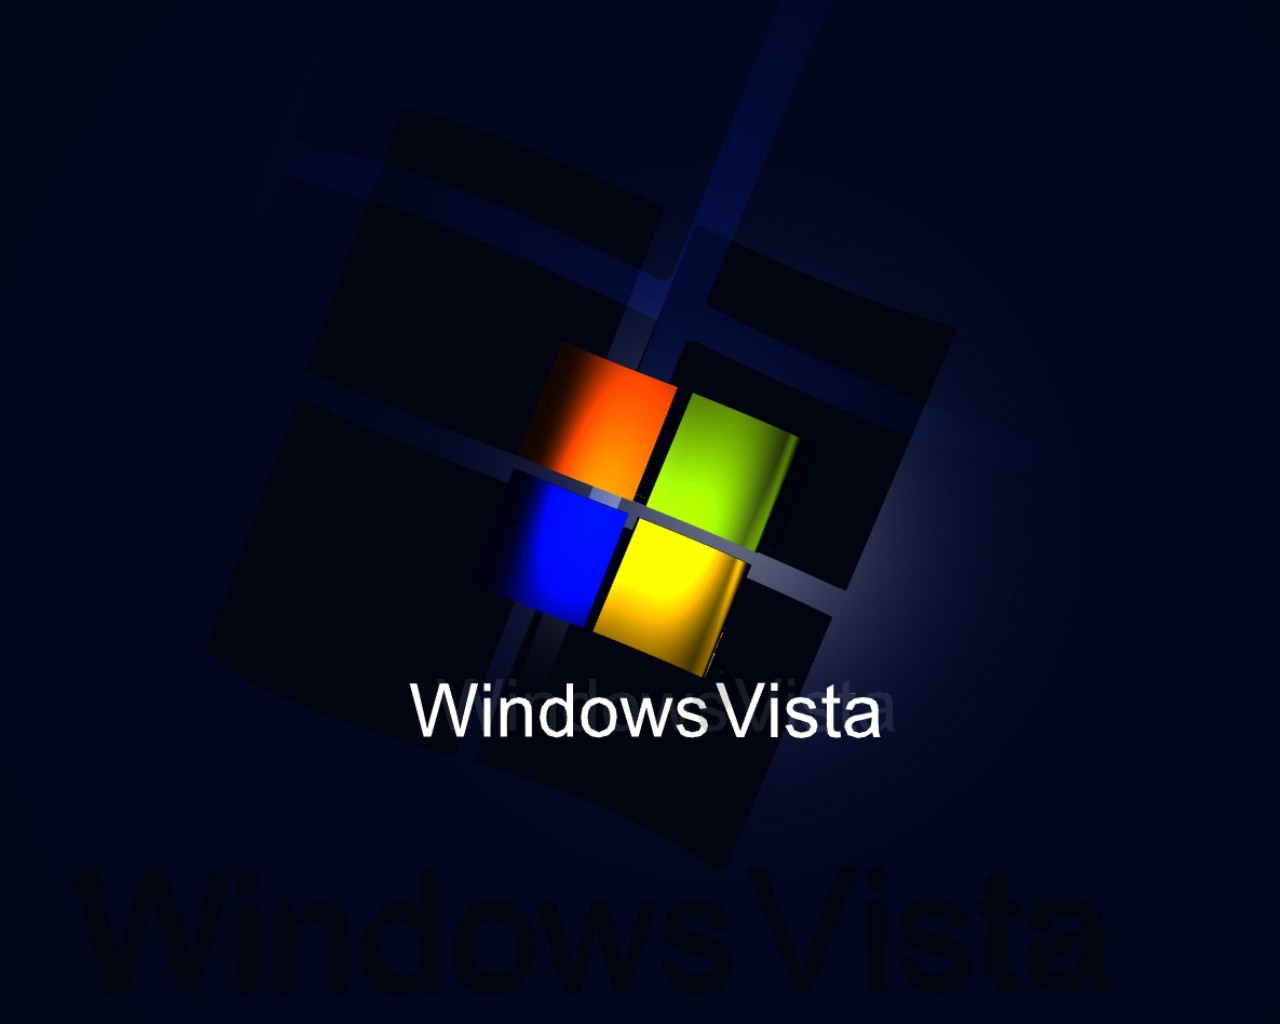 Windows Xp Vista Night Blue Image